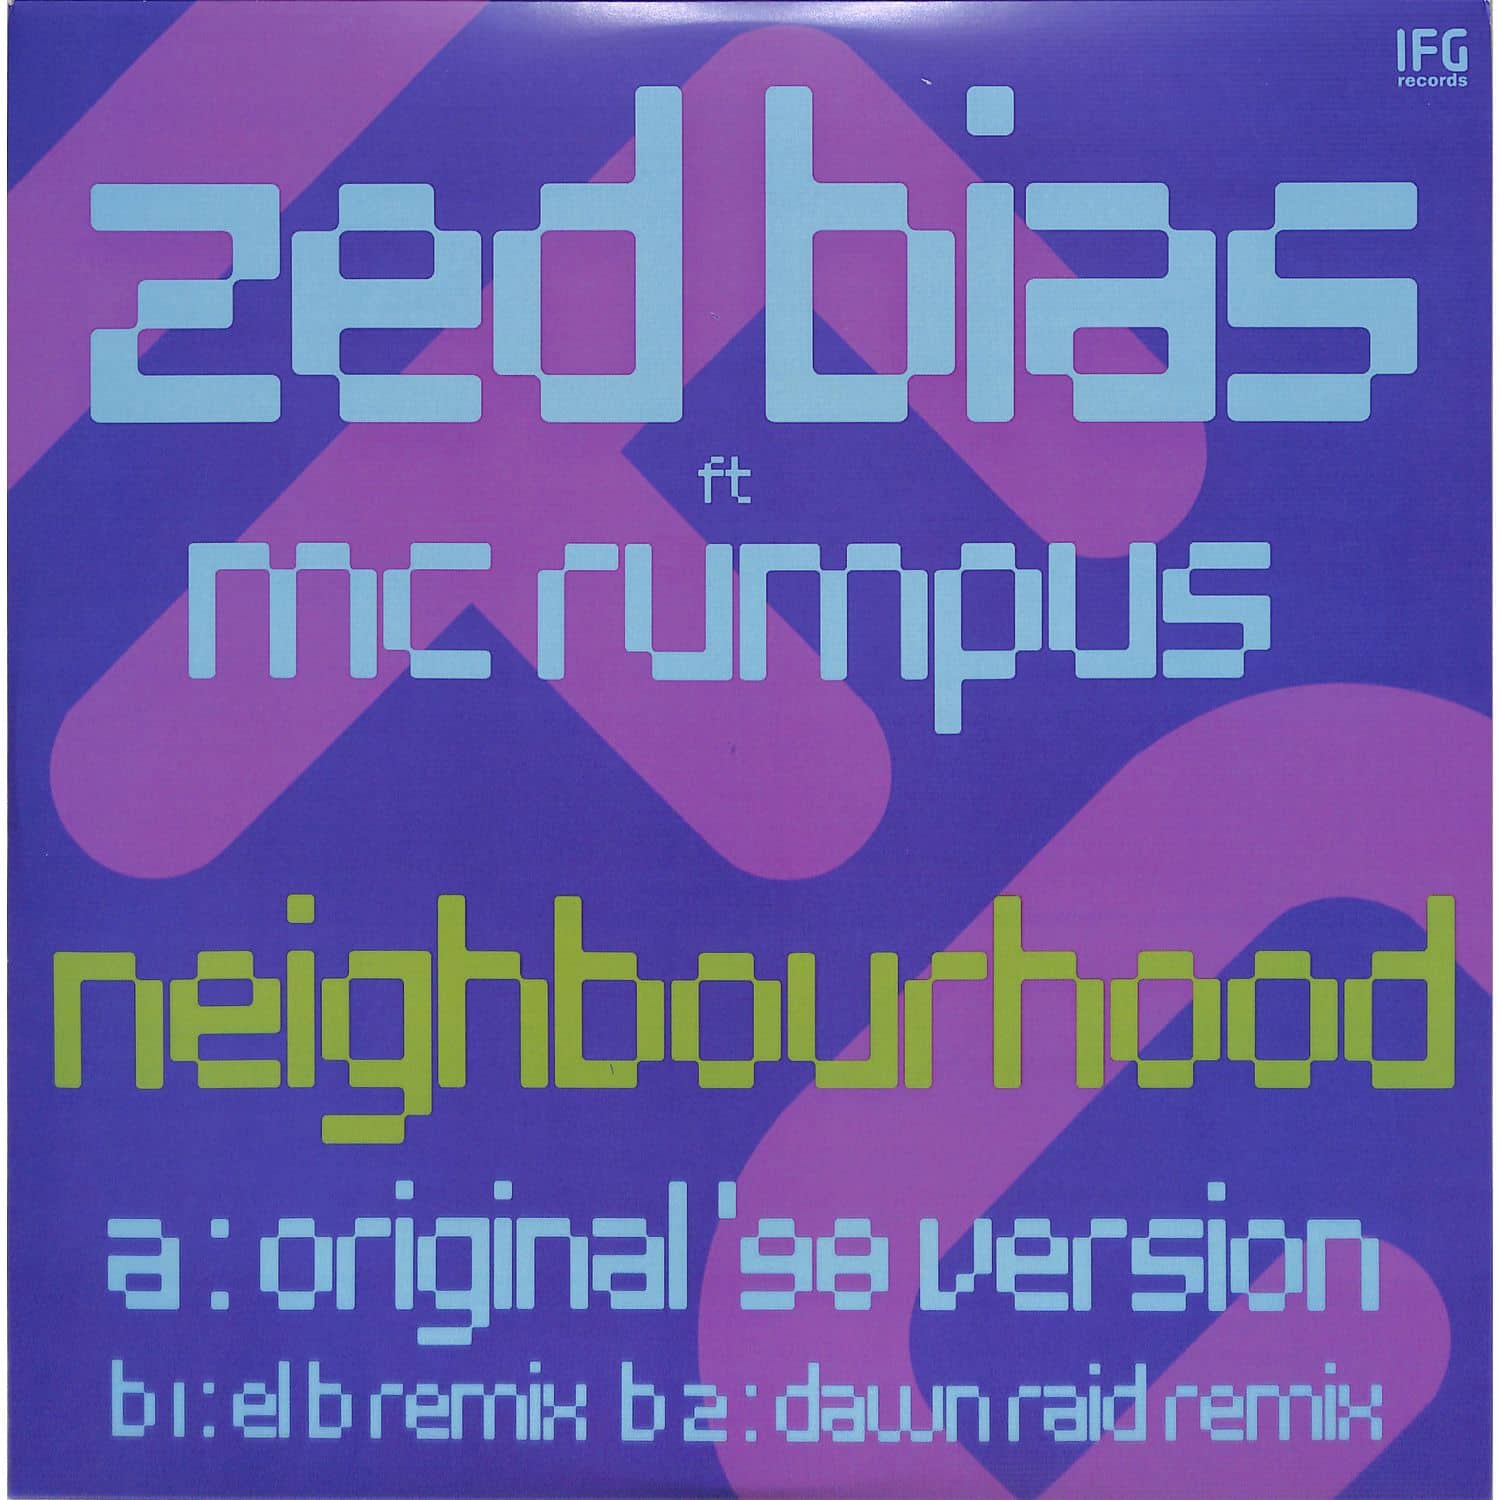 Zed Bias feat MC Rumpus - NEIGHBOURHOOD 